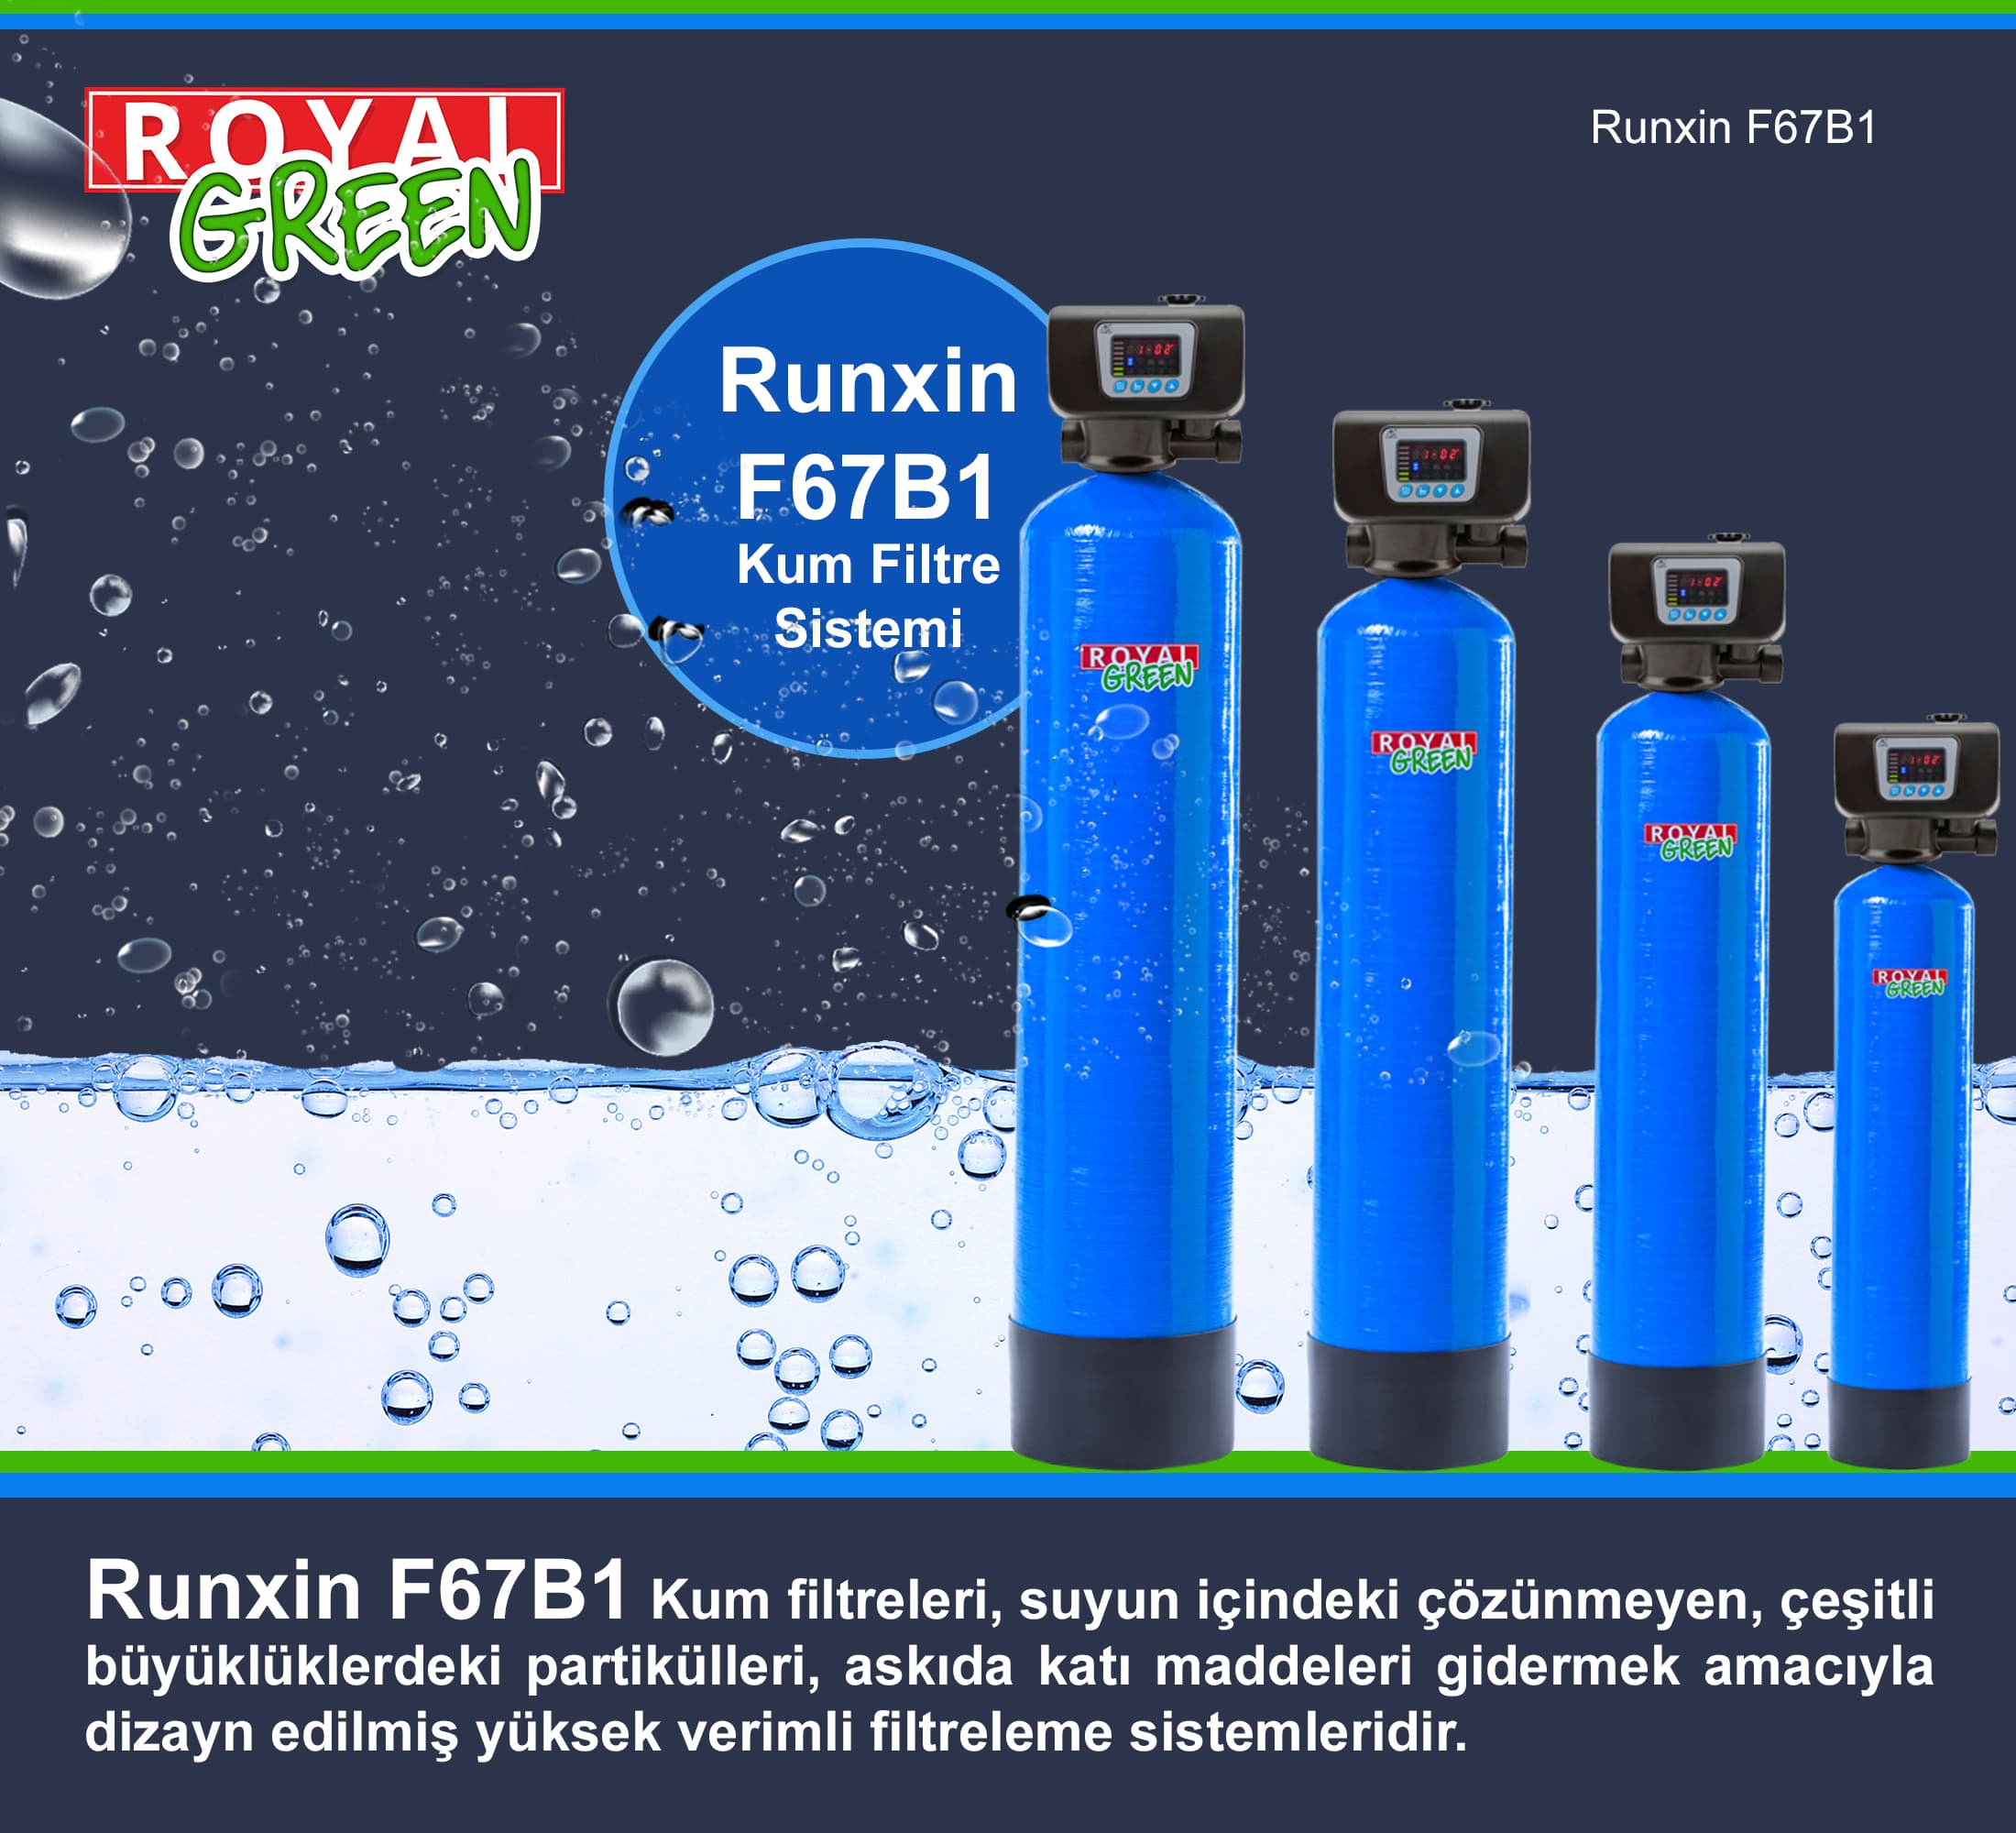 Runxin F67B1 Valfli Kum Filtreleme Sistemleri Banneri